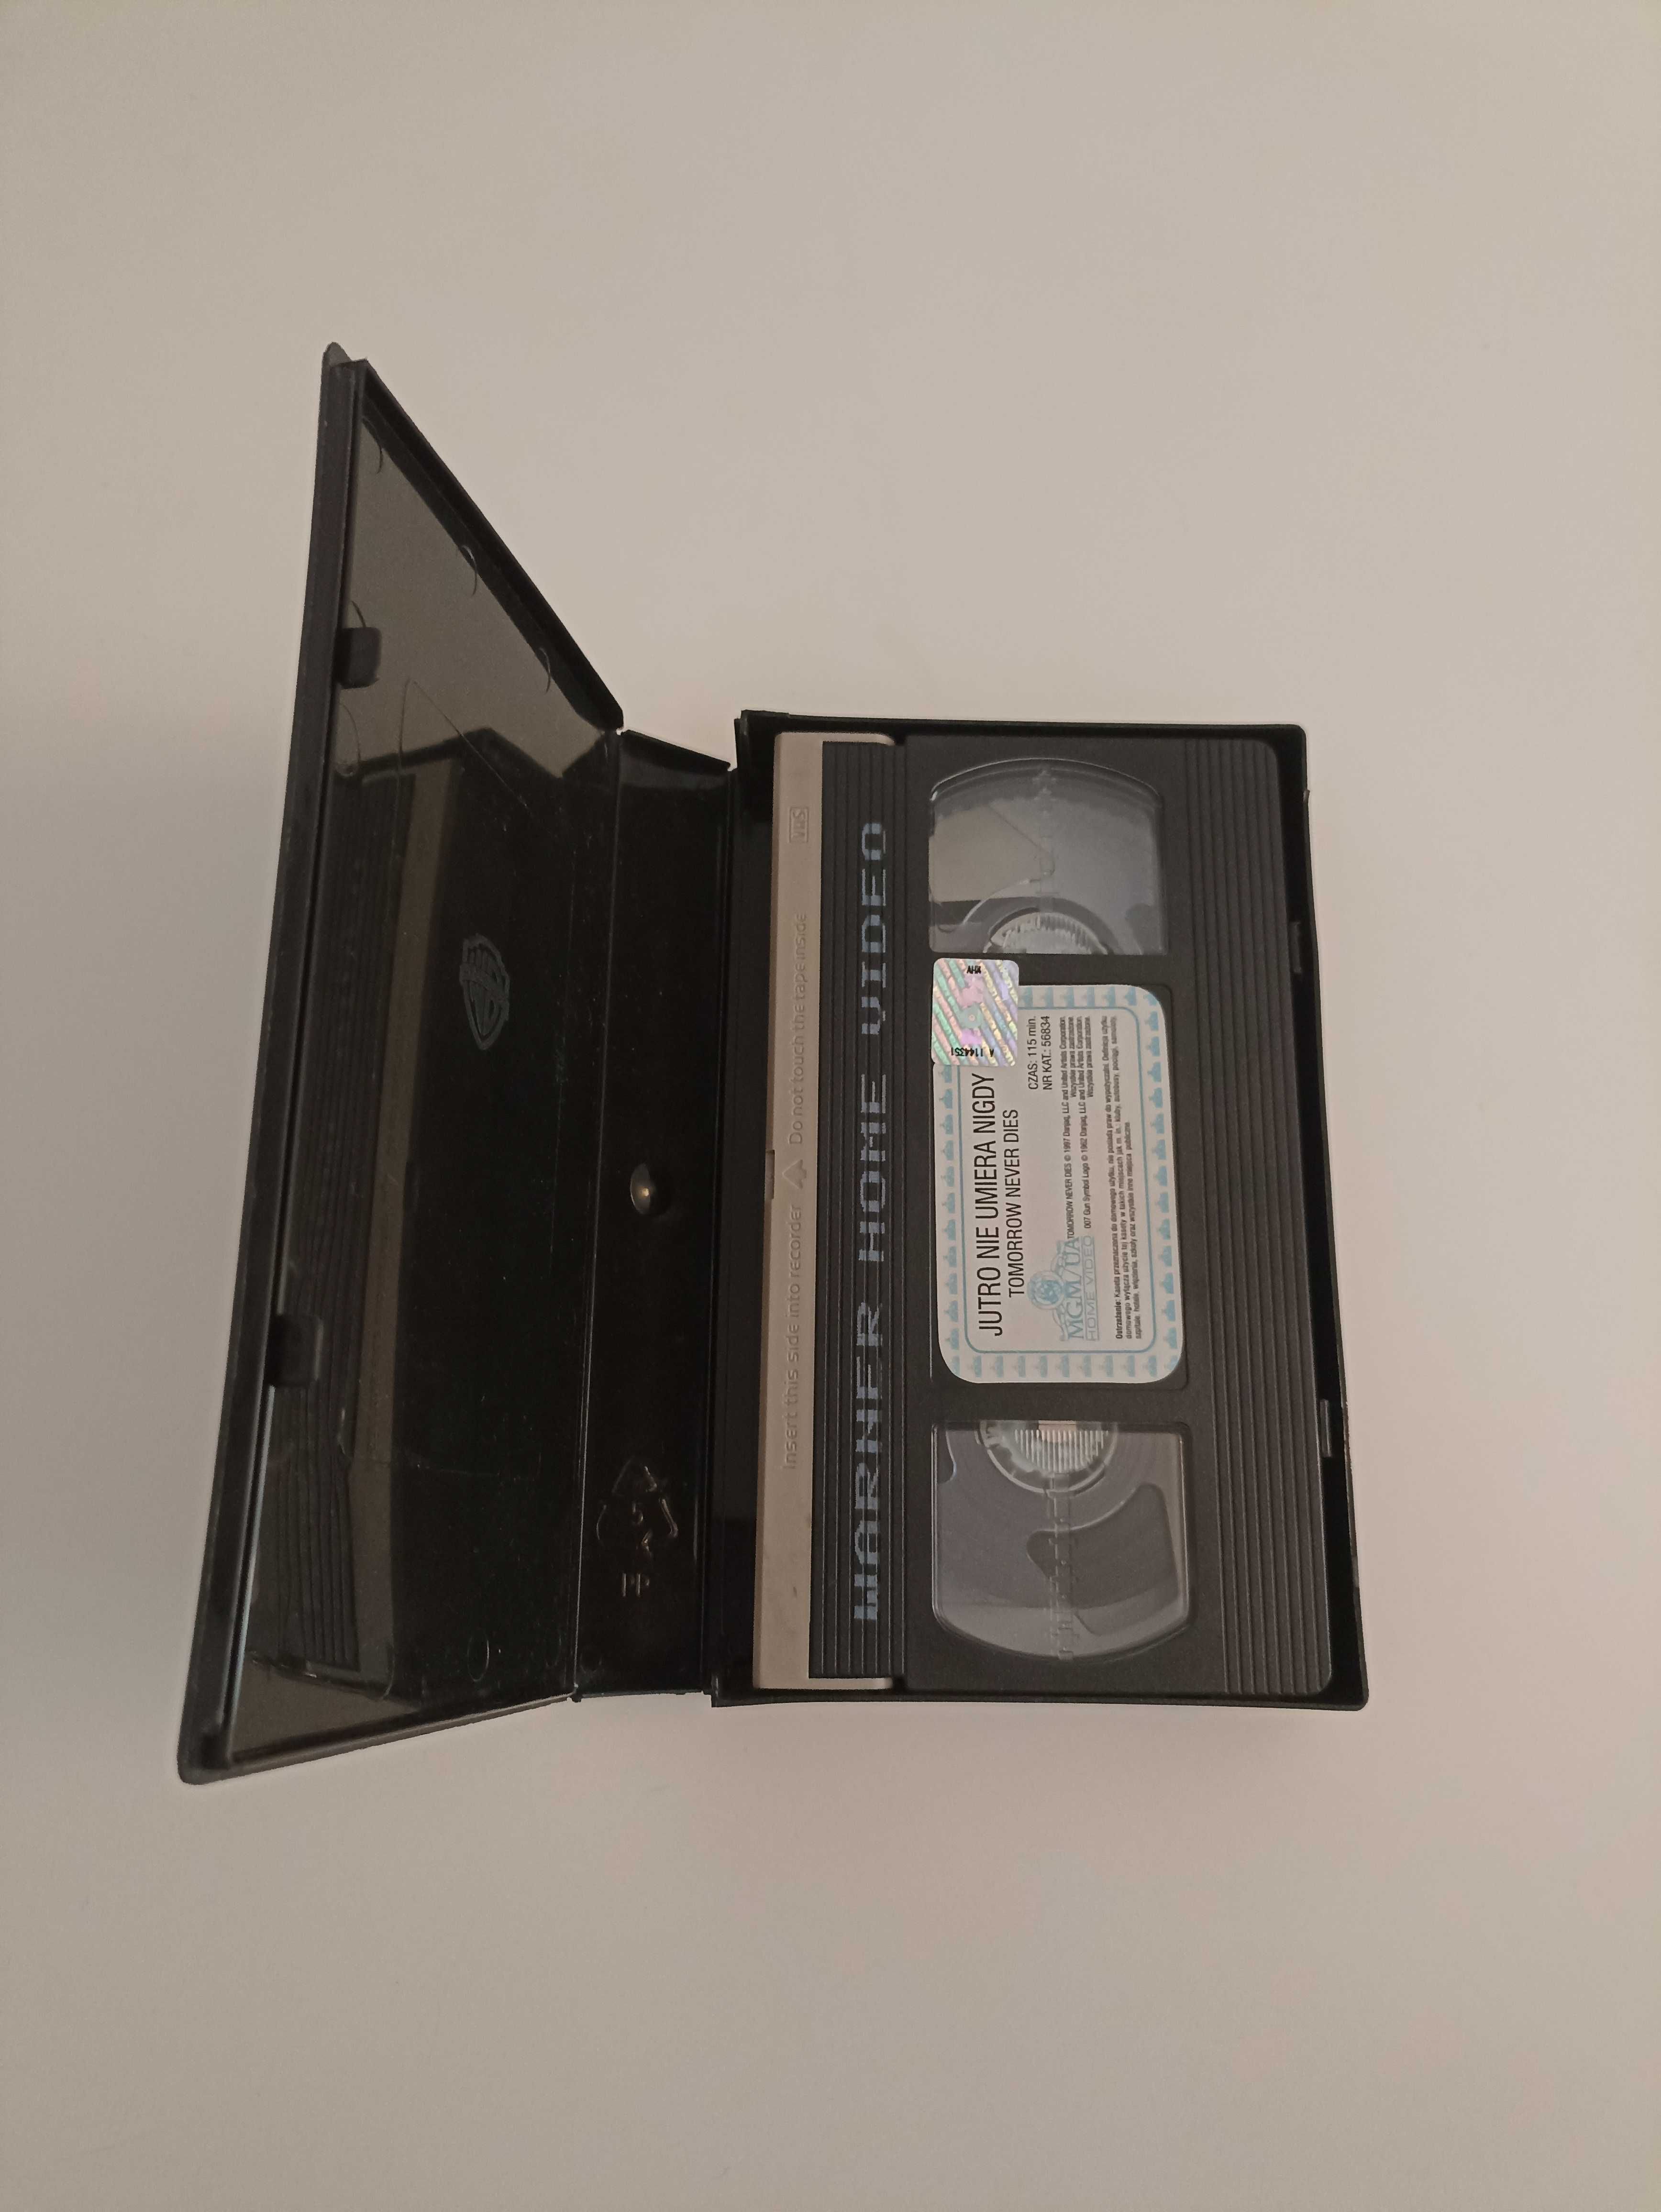 Jutro nie umiera nigdy (James Bond) - film, kaseta VHS